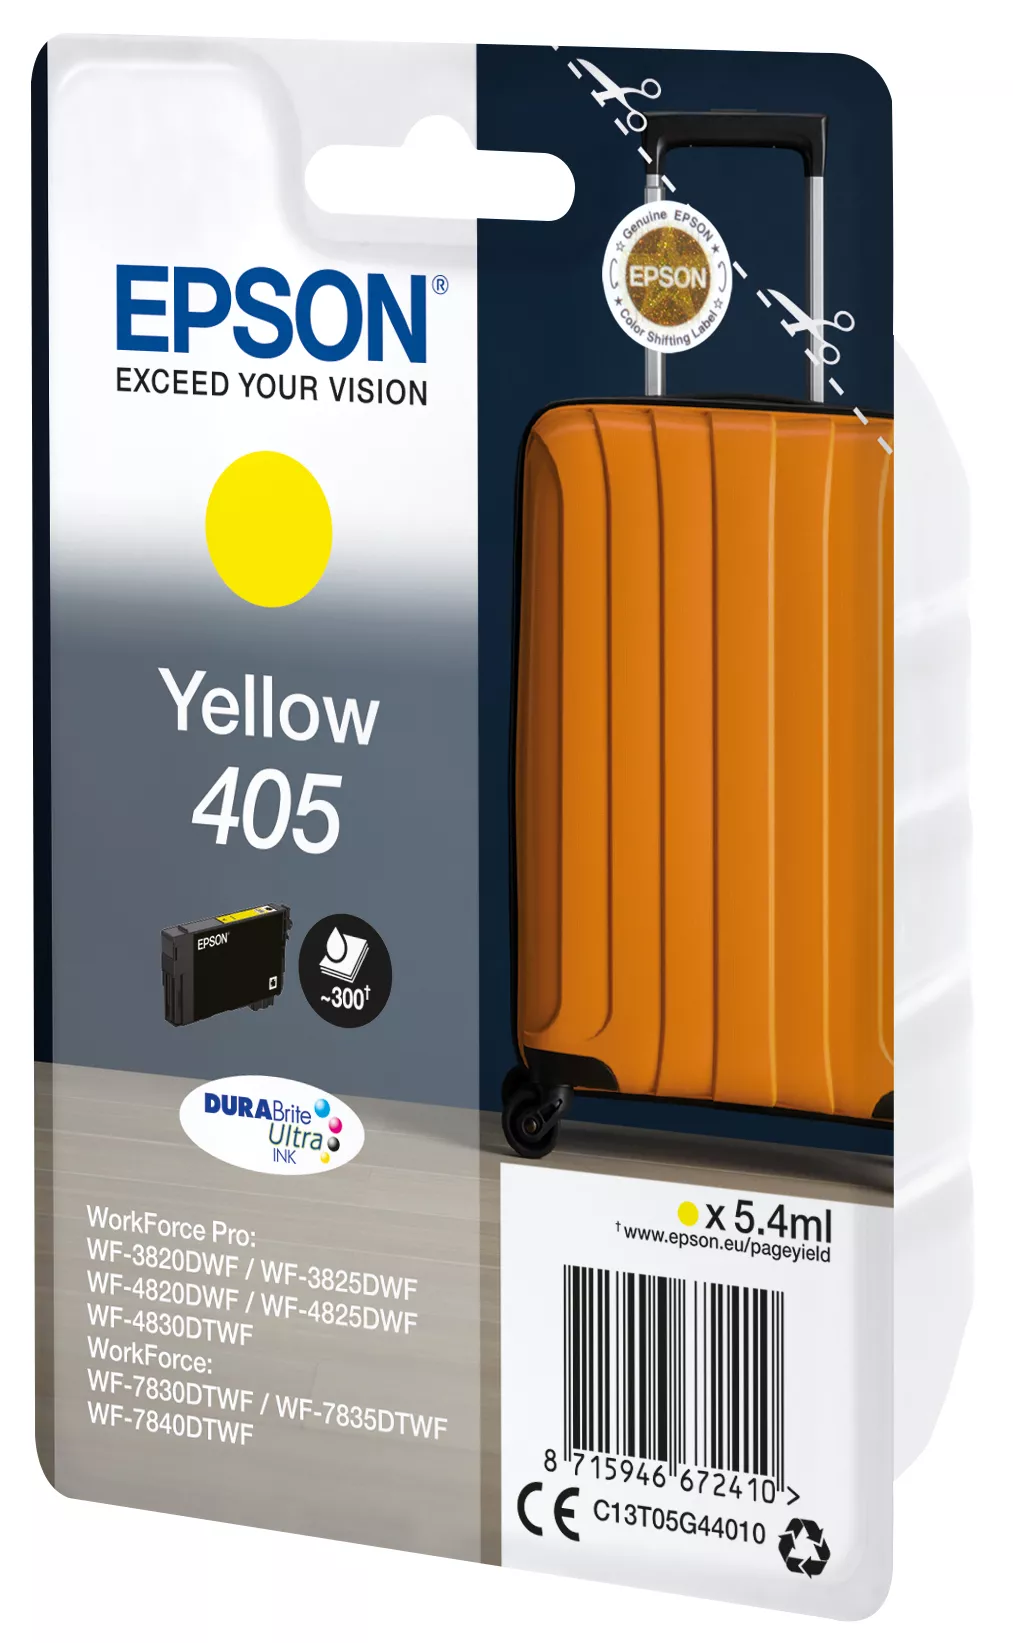 Vente Epson Singlepack Yellow 405 DURABrite Ultra Ink Epson au meilleur prix - visuel 2